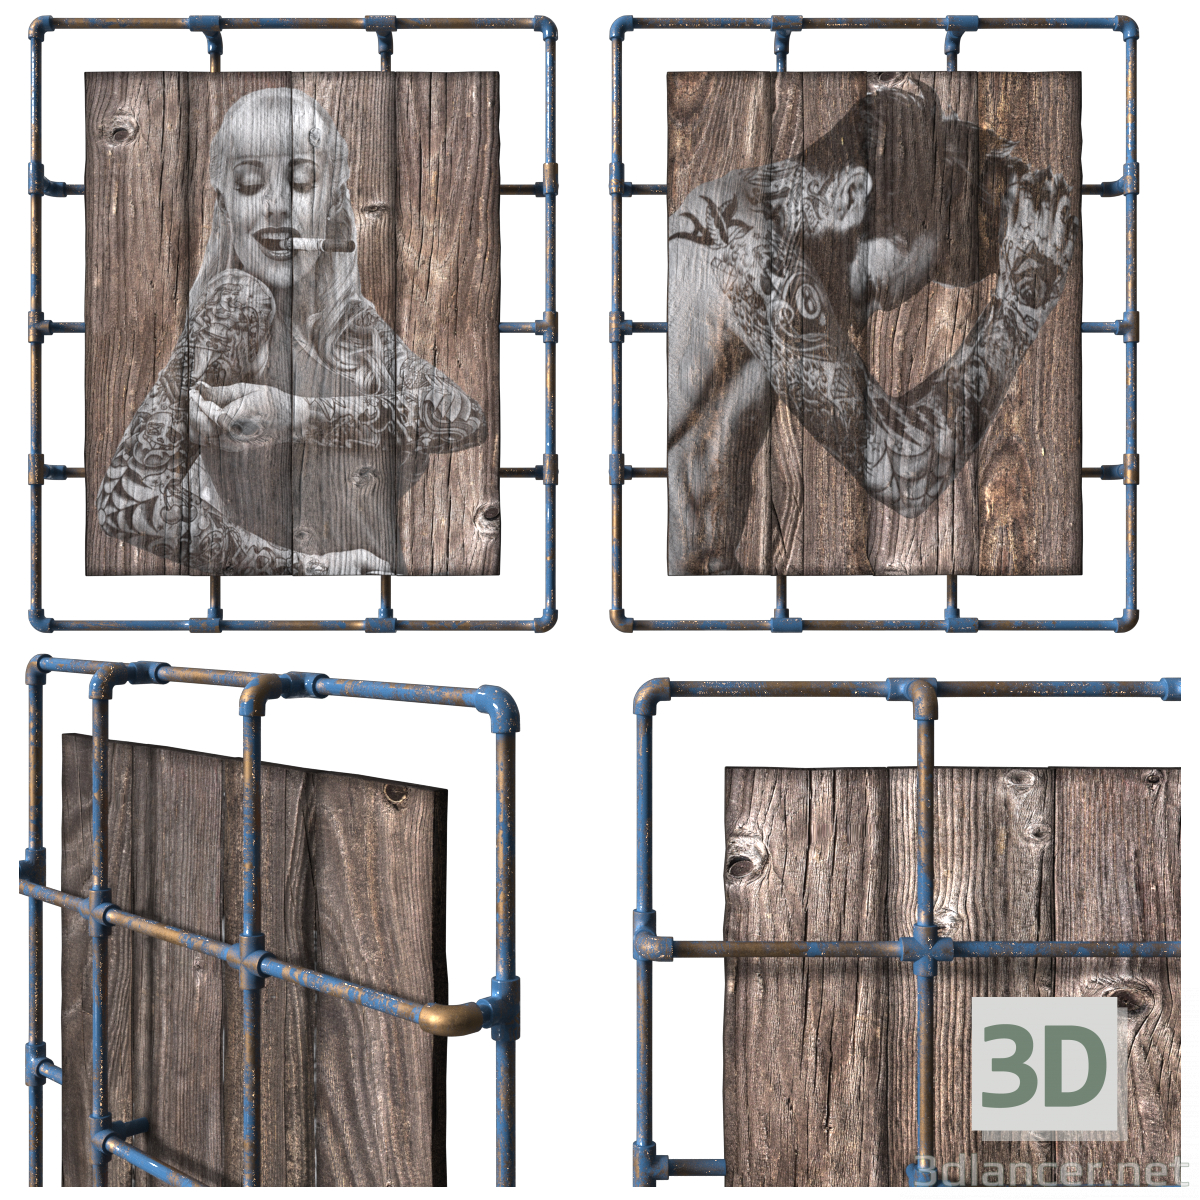 3d Painting on natural wooden boards. The loft-style. модель купить - ракурс